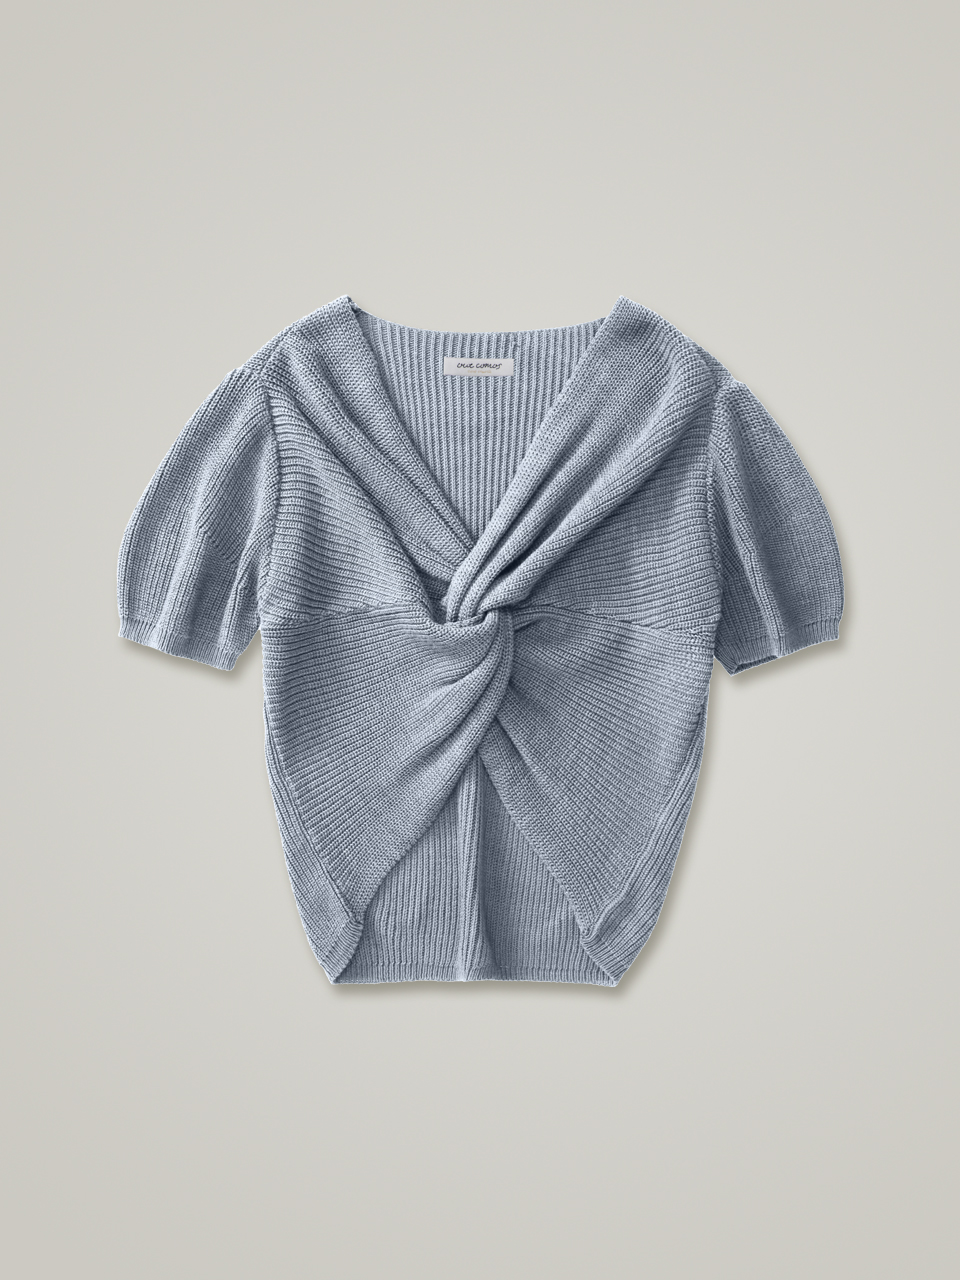 comos 880 twist volume cotton knit (gray)